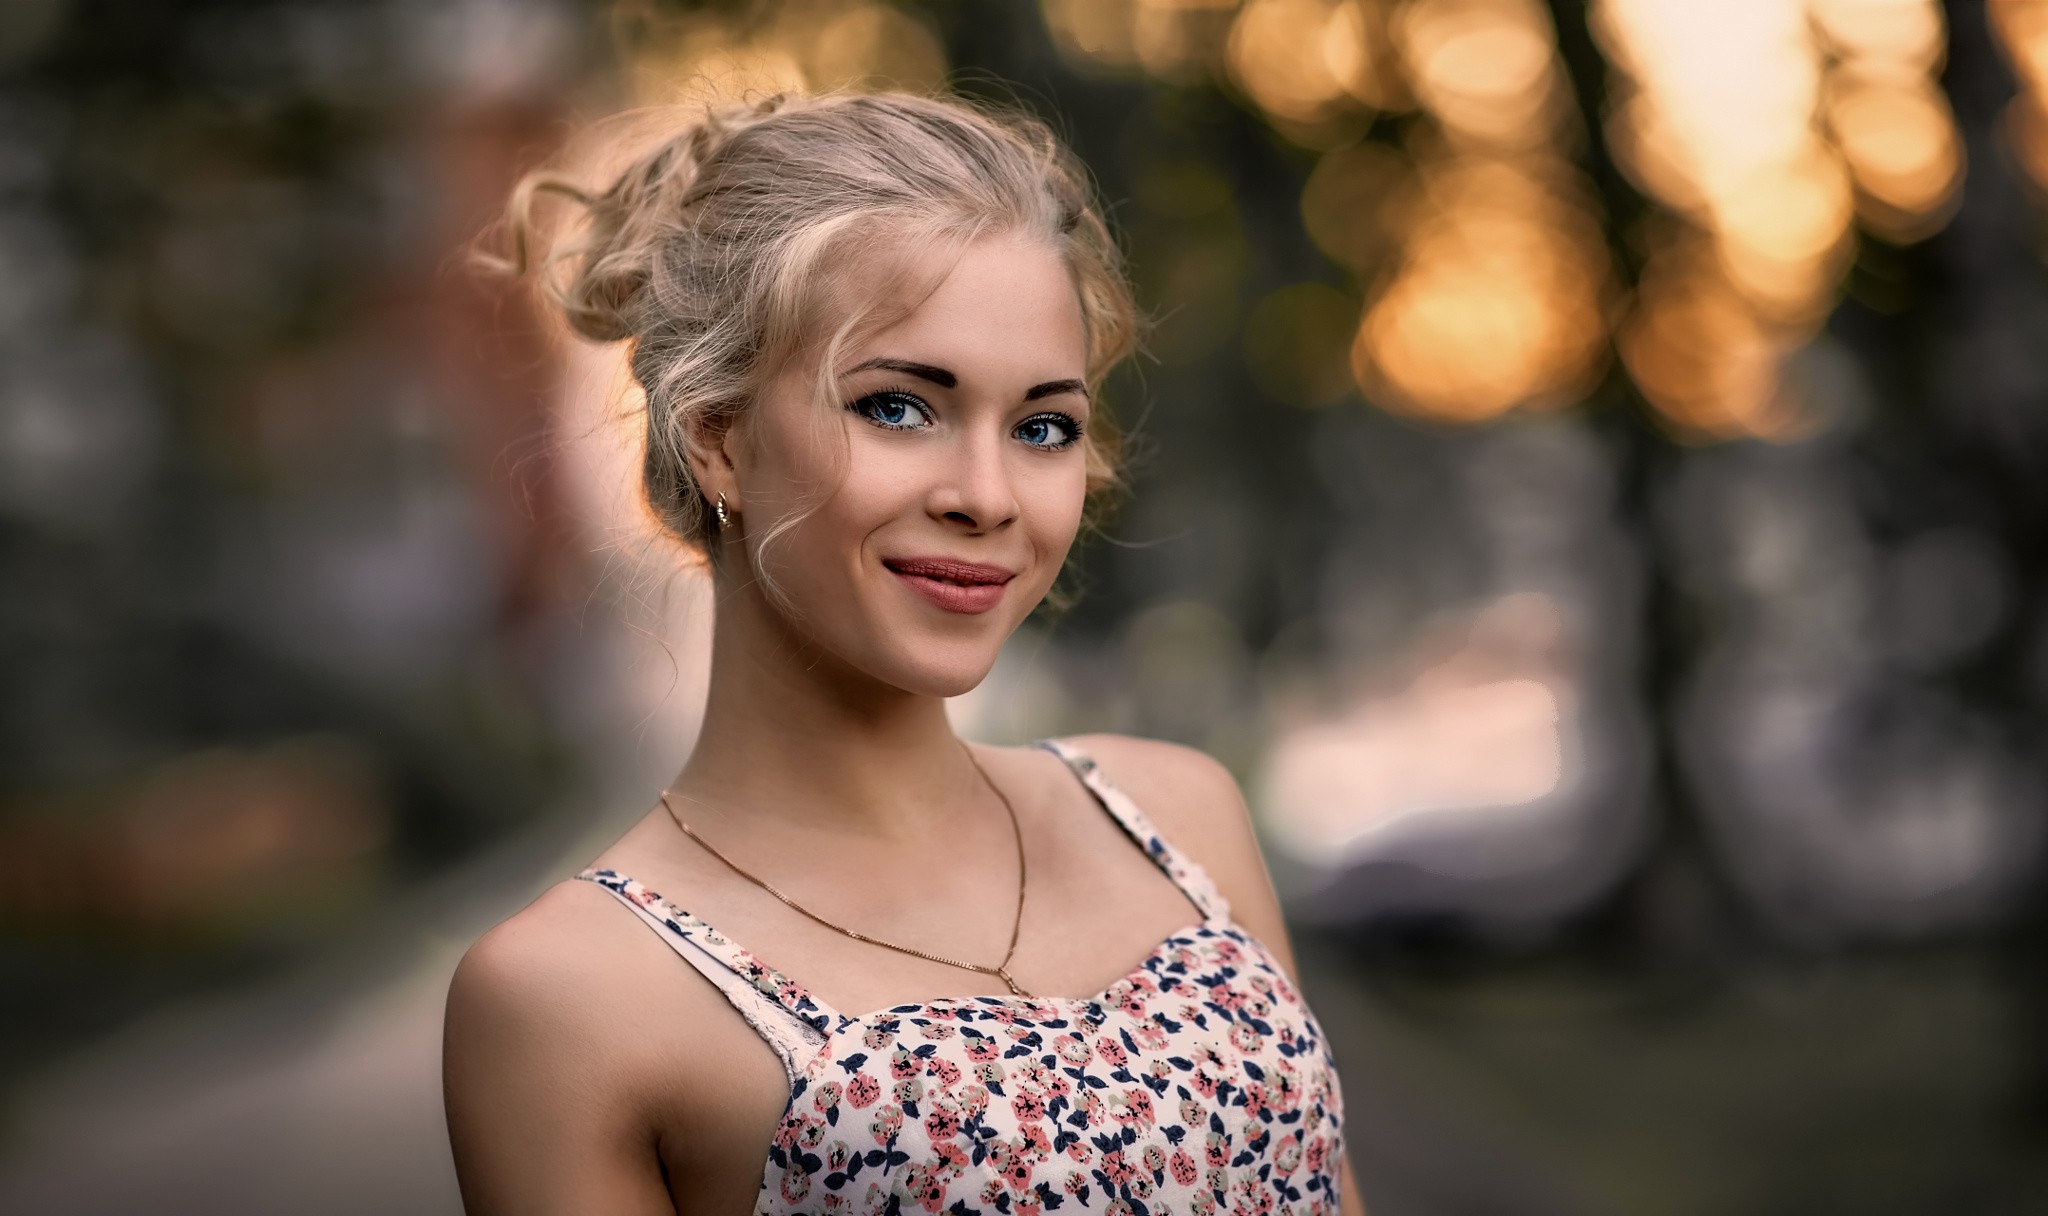 Women Model Blonde Looking At Viewer Face Portrait Depth Of Field Smiling Blue Eyes Women Outdoors S 2048x1216